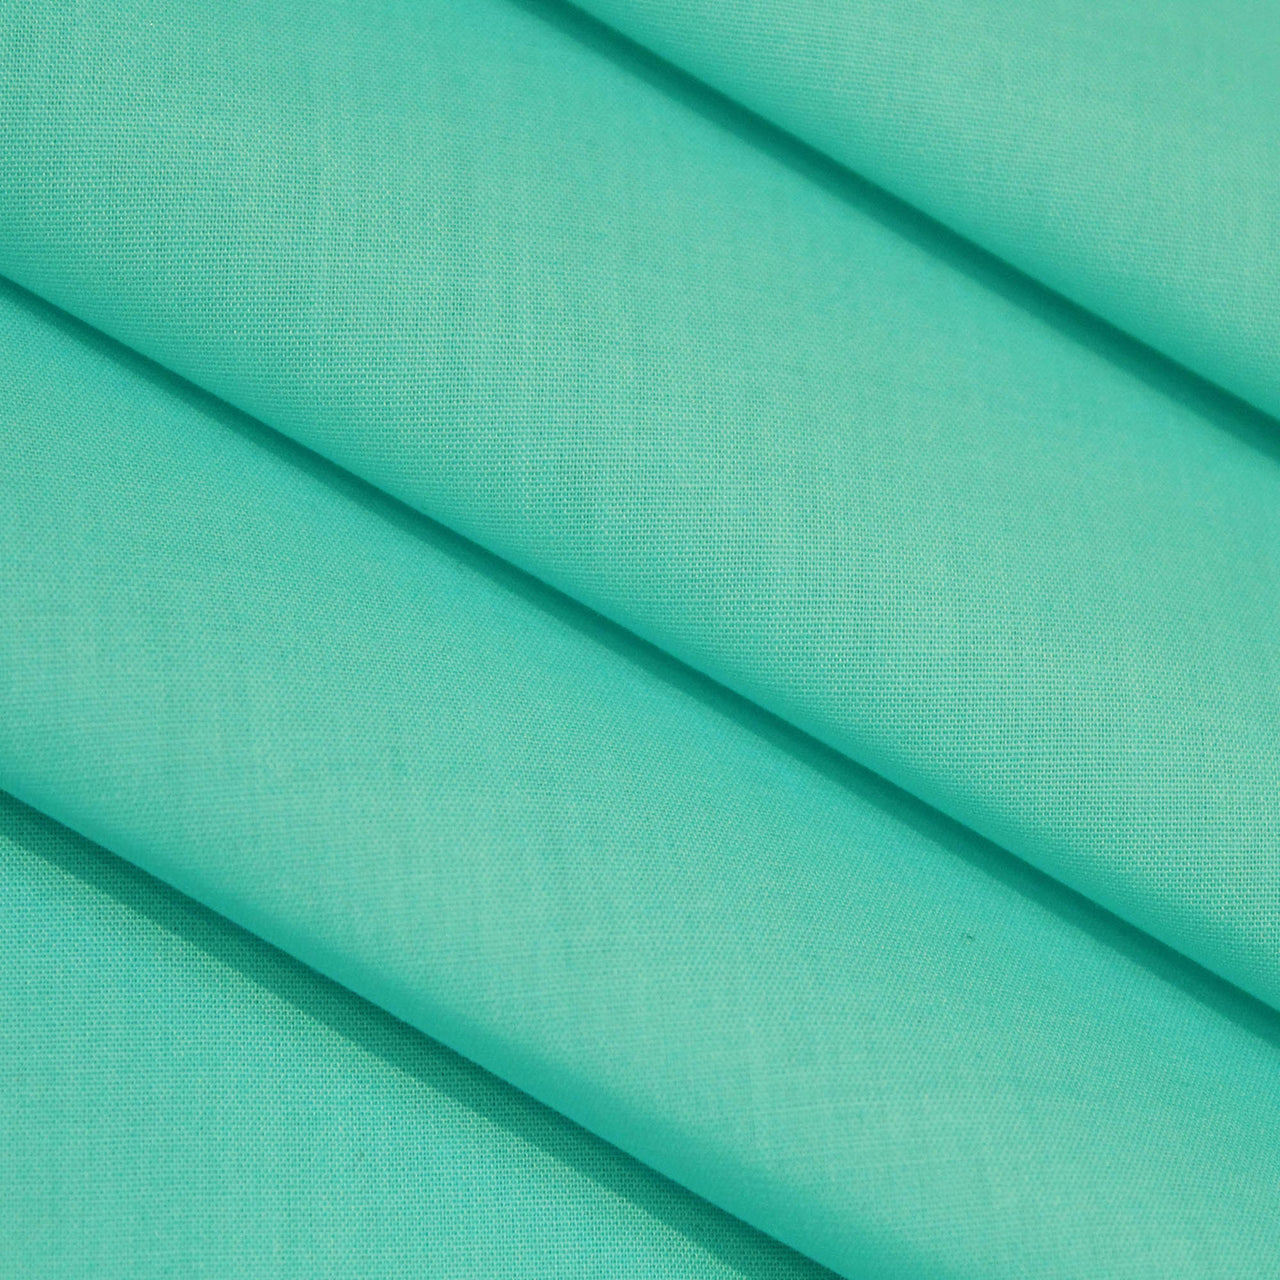 Turquoise - Superior Quality Plain Poly Cotton - Width 114cm